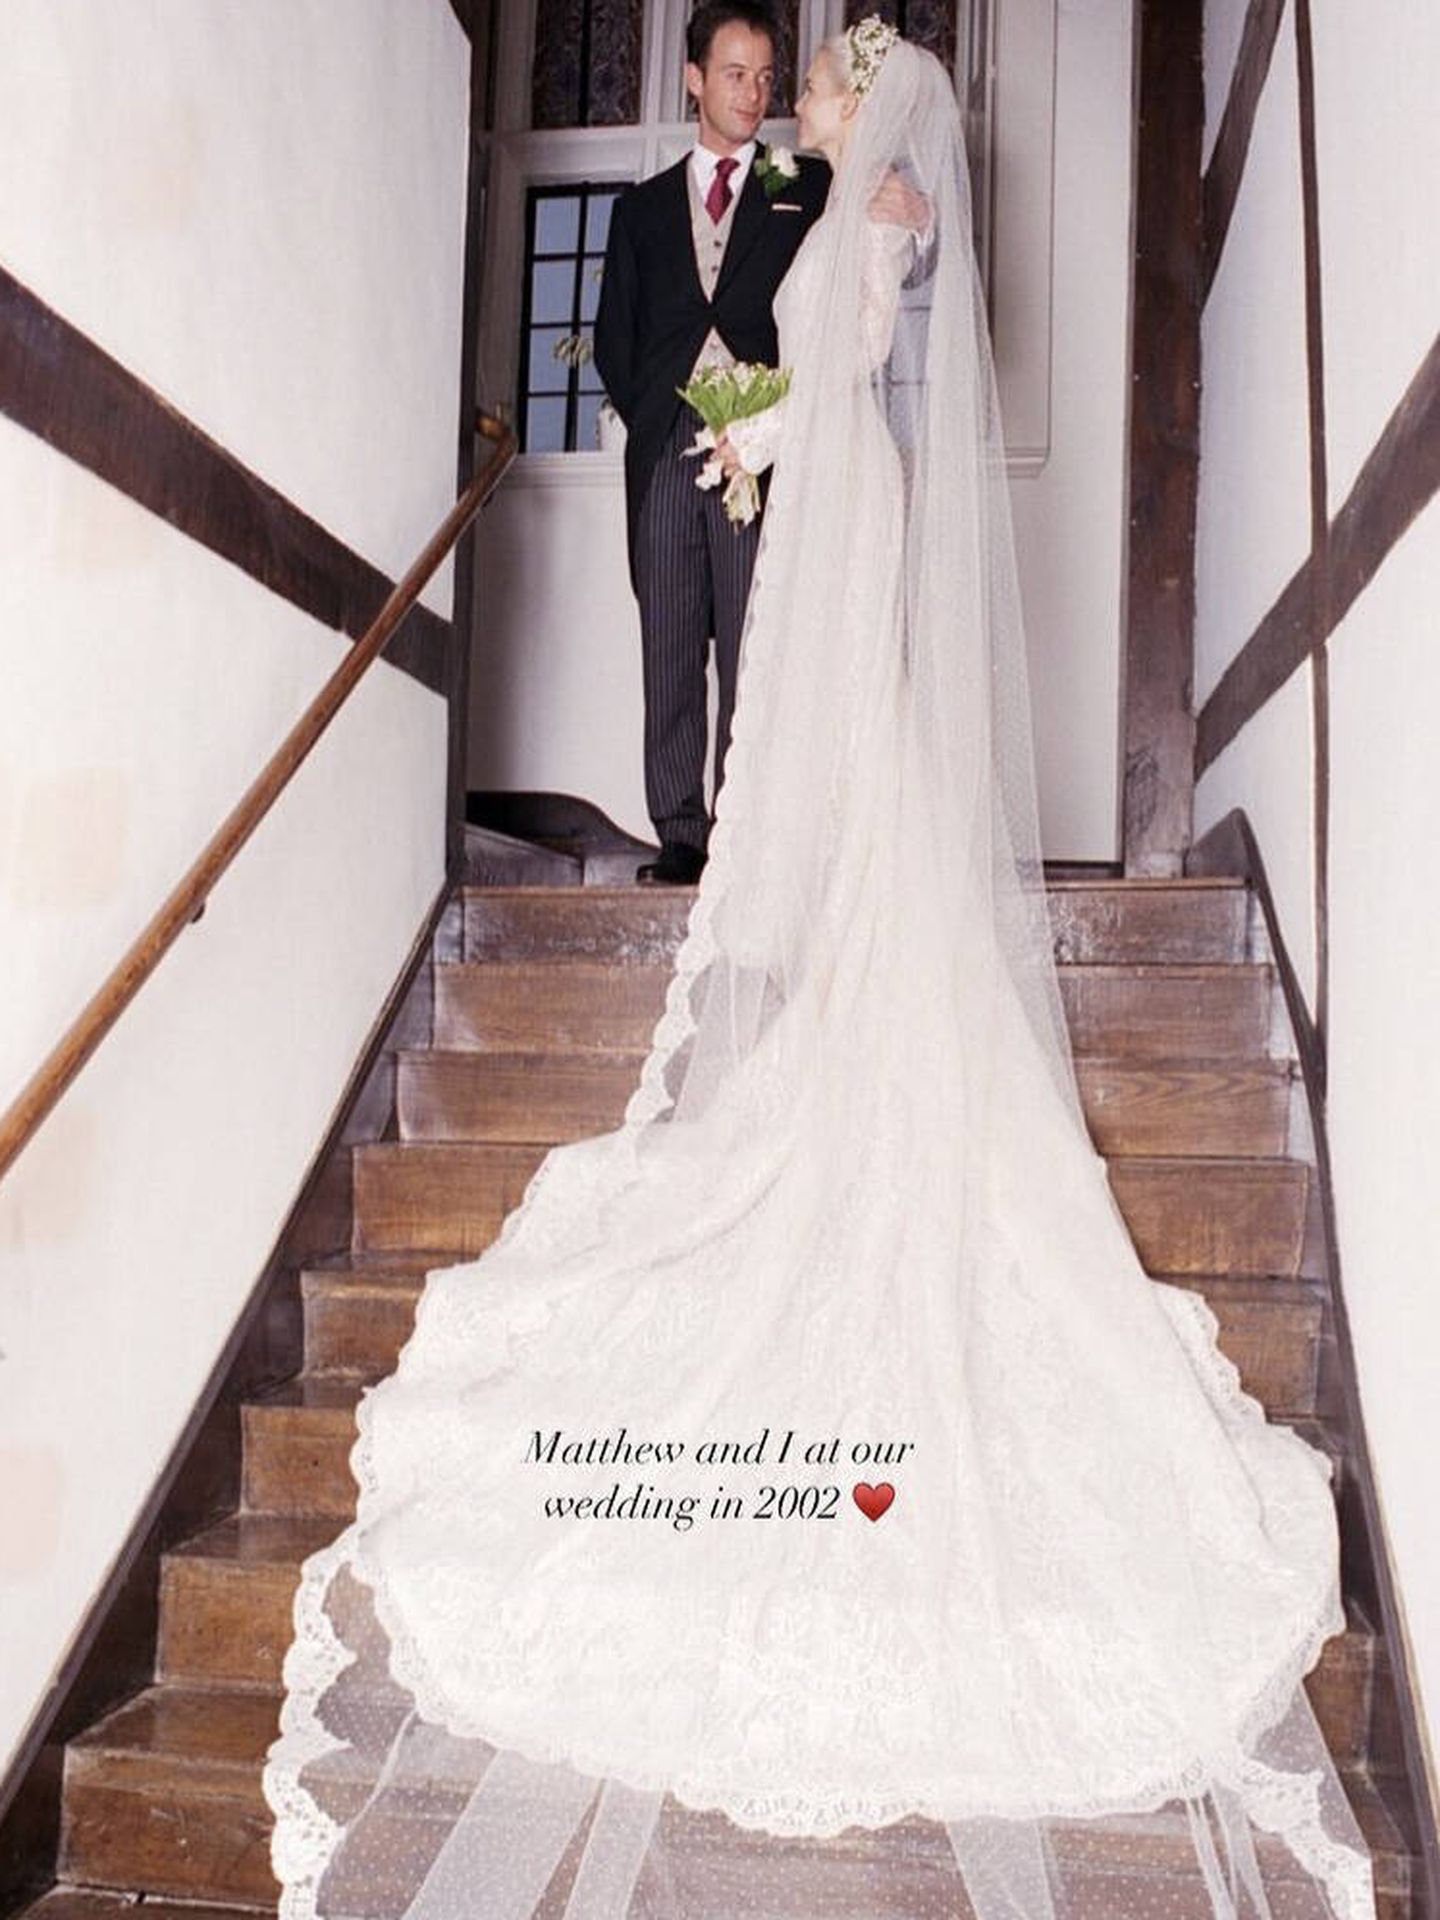 La boda de Claudia Schiffer. (Instagram)